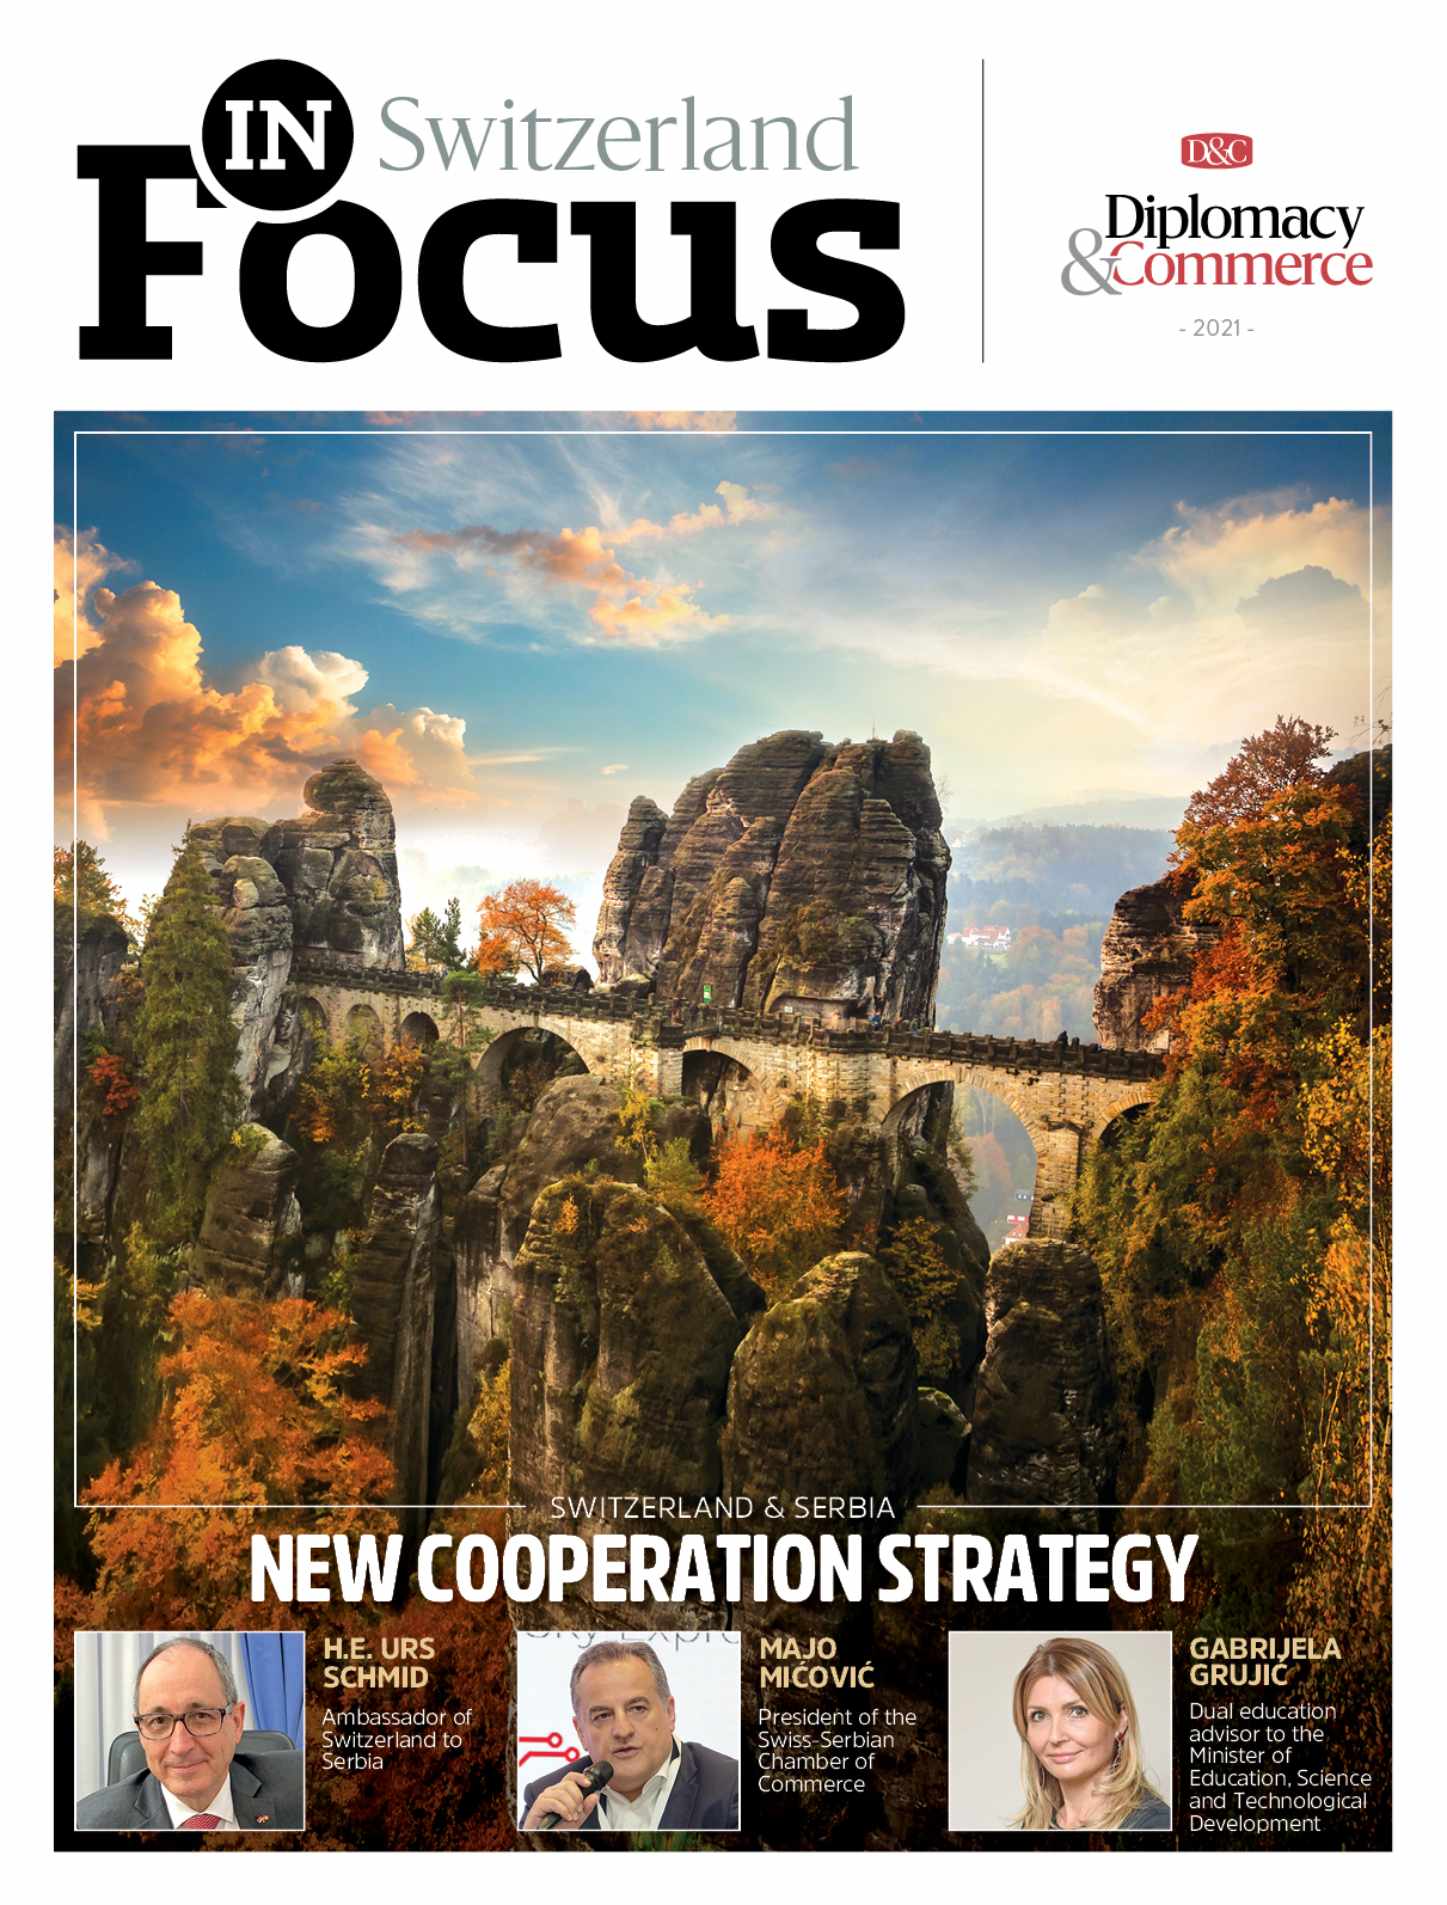 DandC Diplomacy and Commerce - In Focus - Switzerland 2021